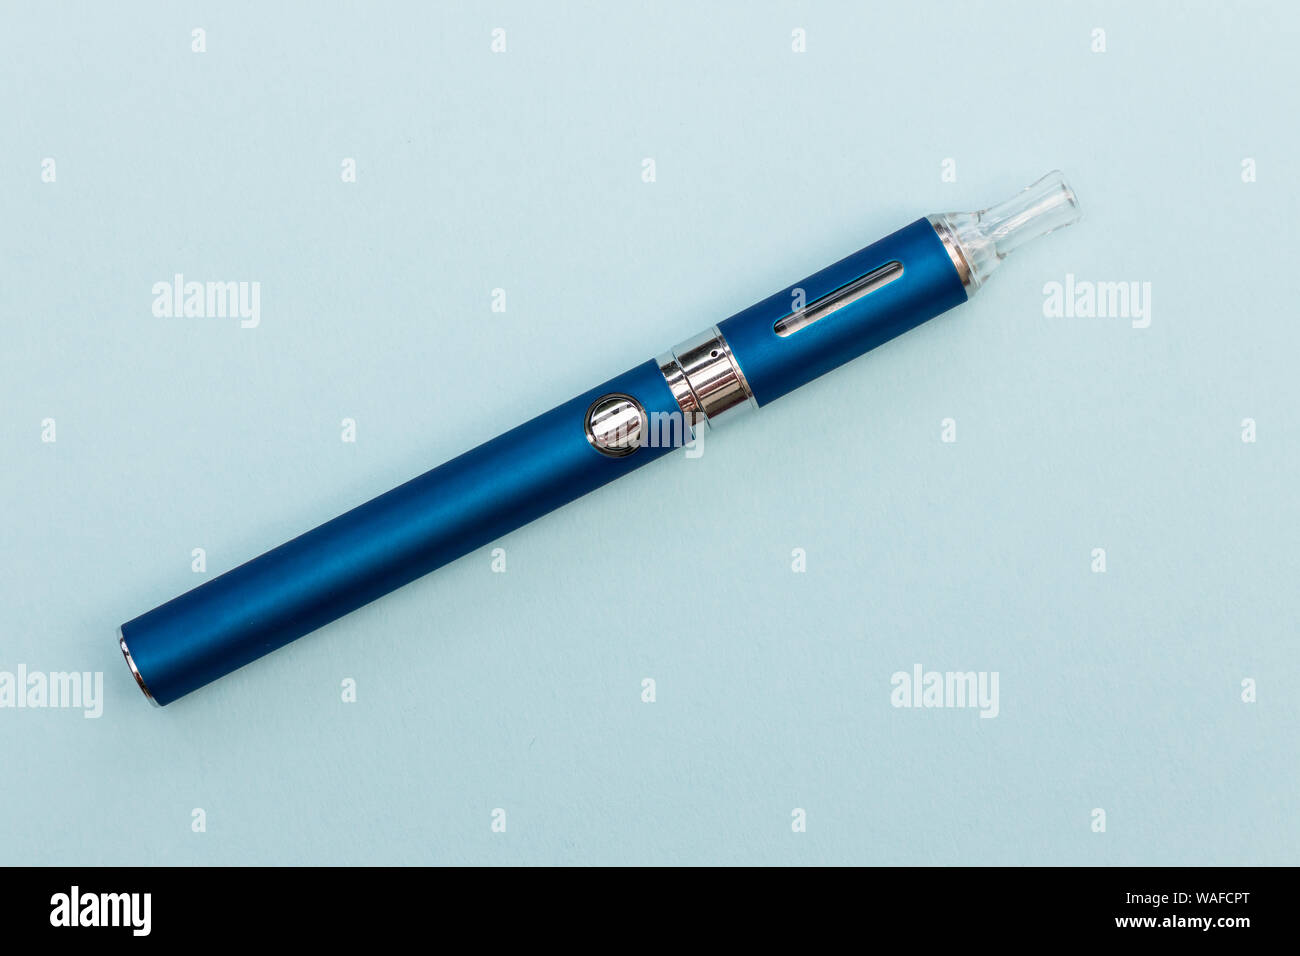 E-Liquid, Nicotine & Cart Vape Pens